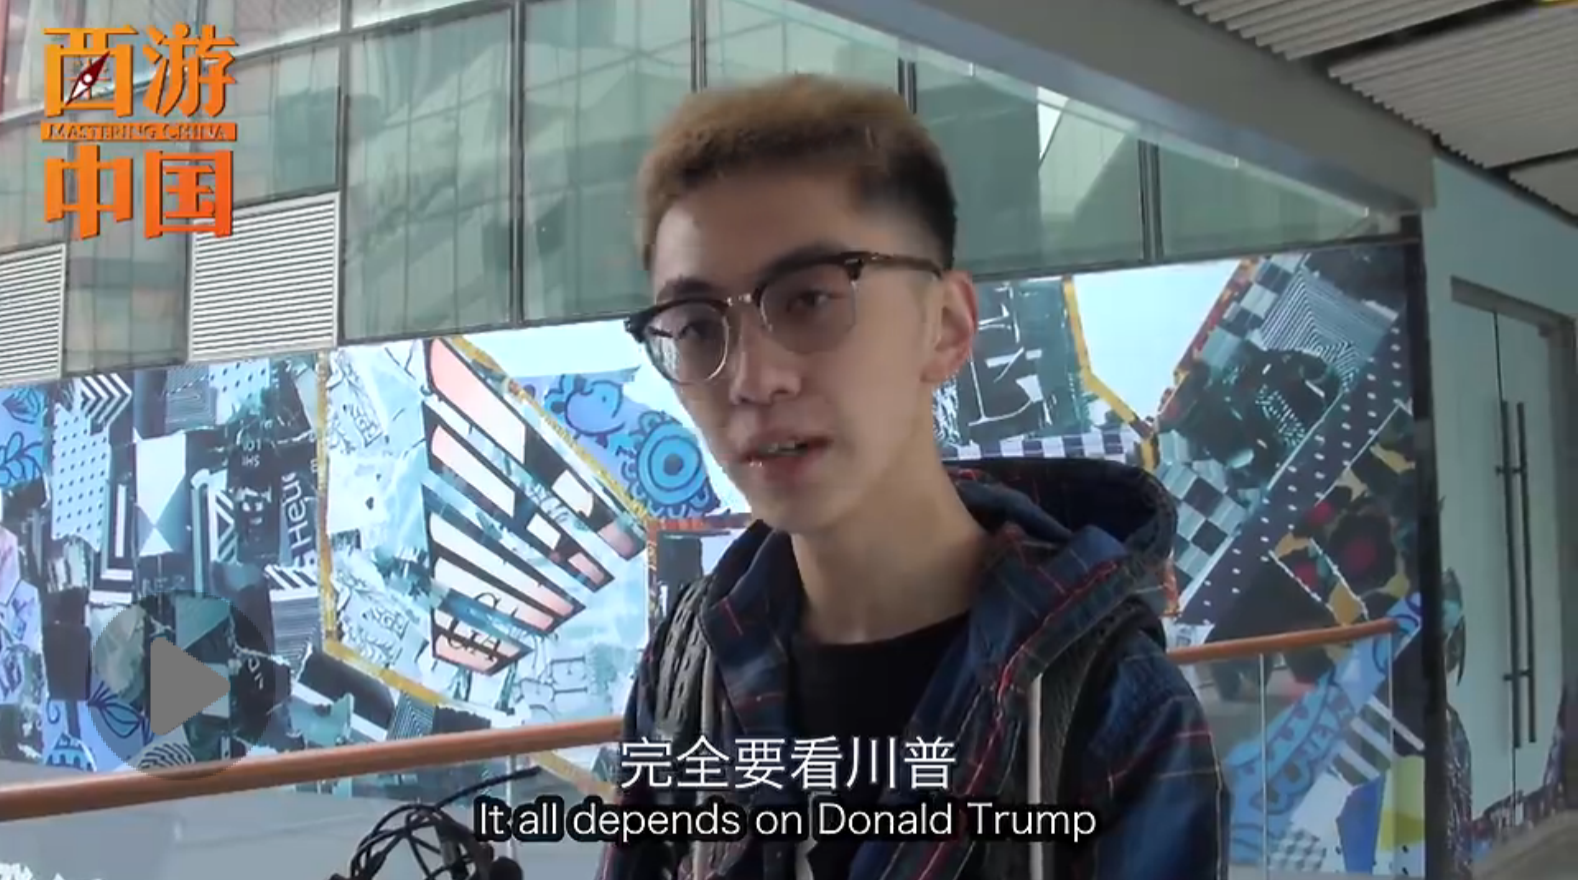 Beijing Critics Underwhelmed by Ivanka Trump's Brand in New Video